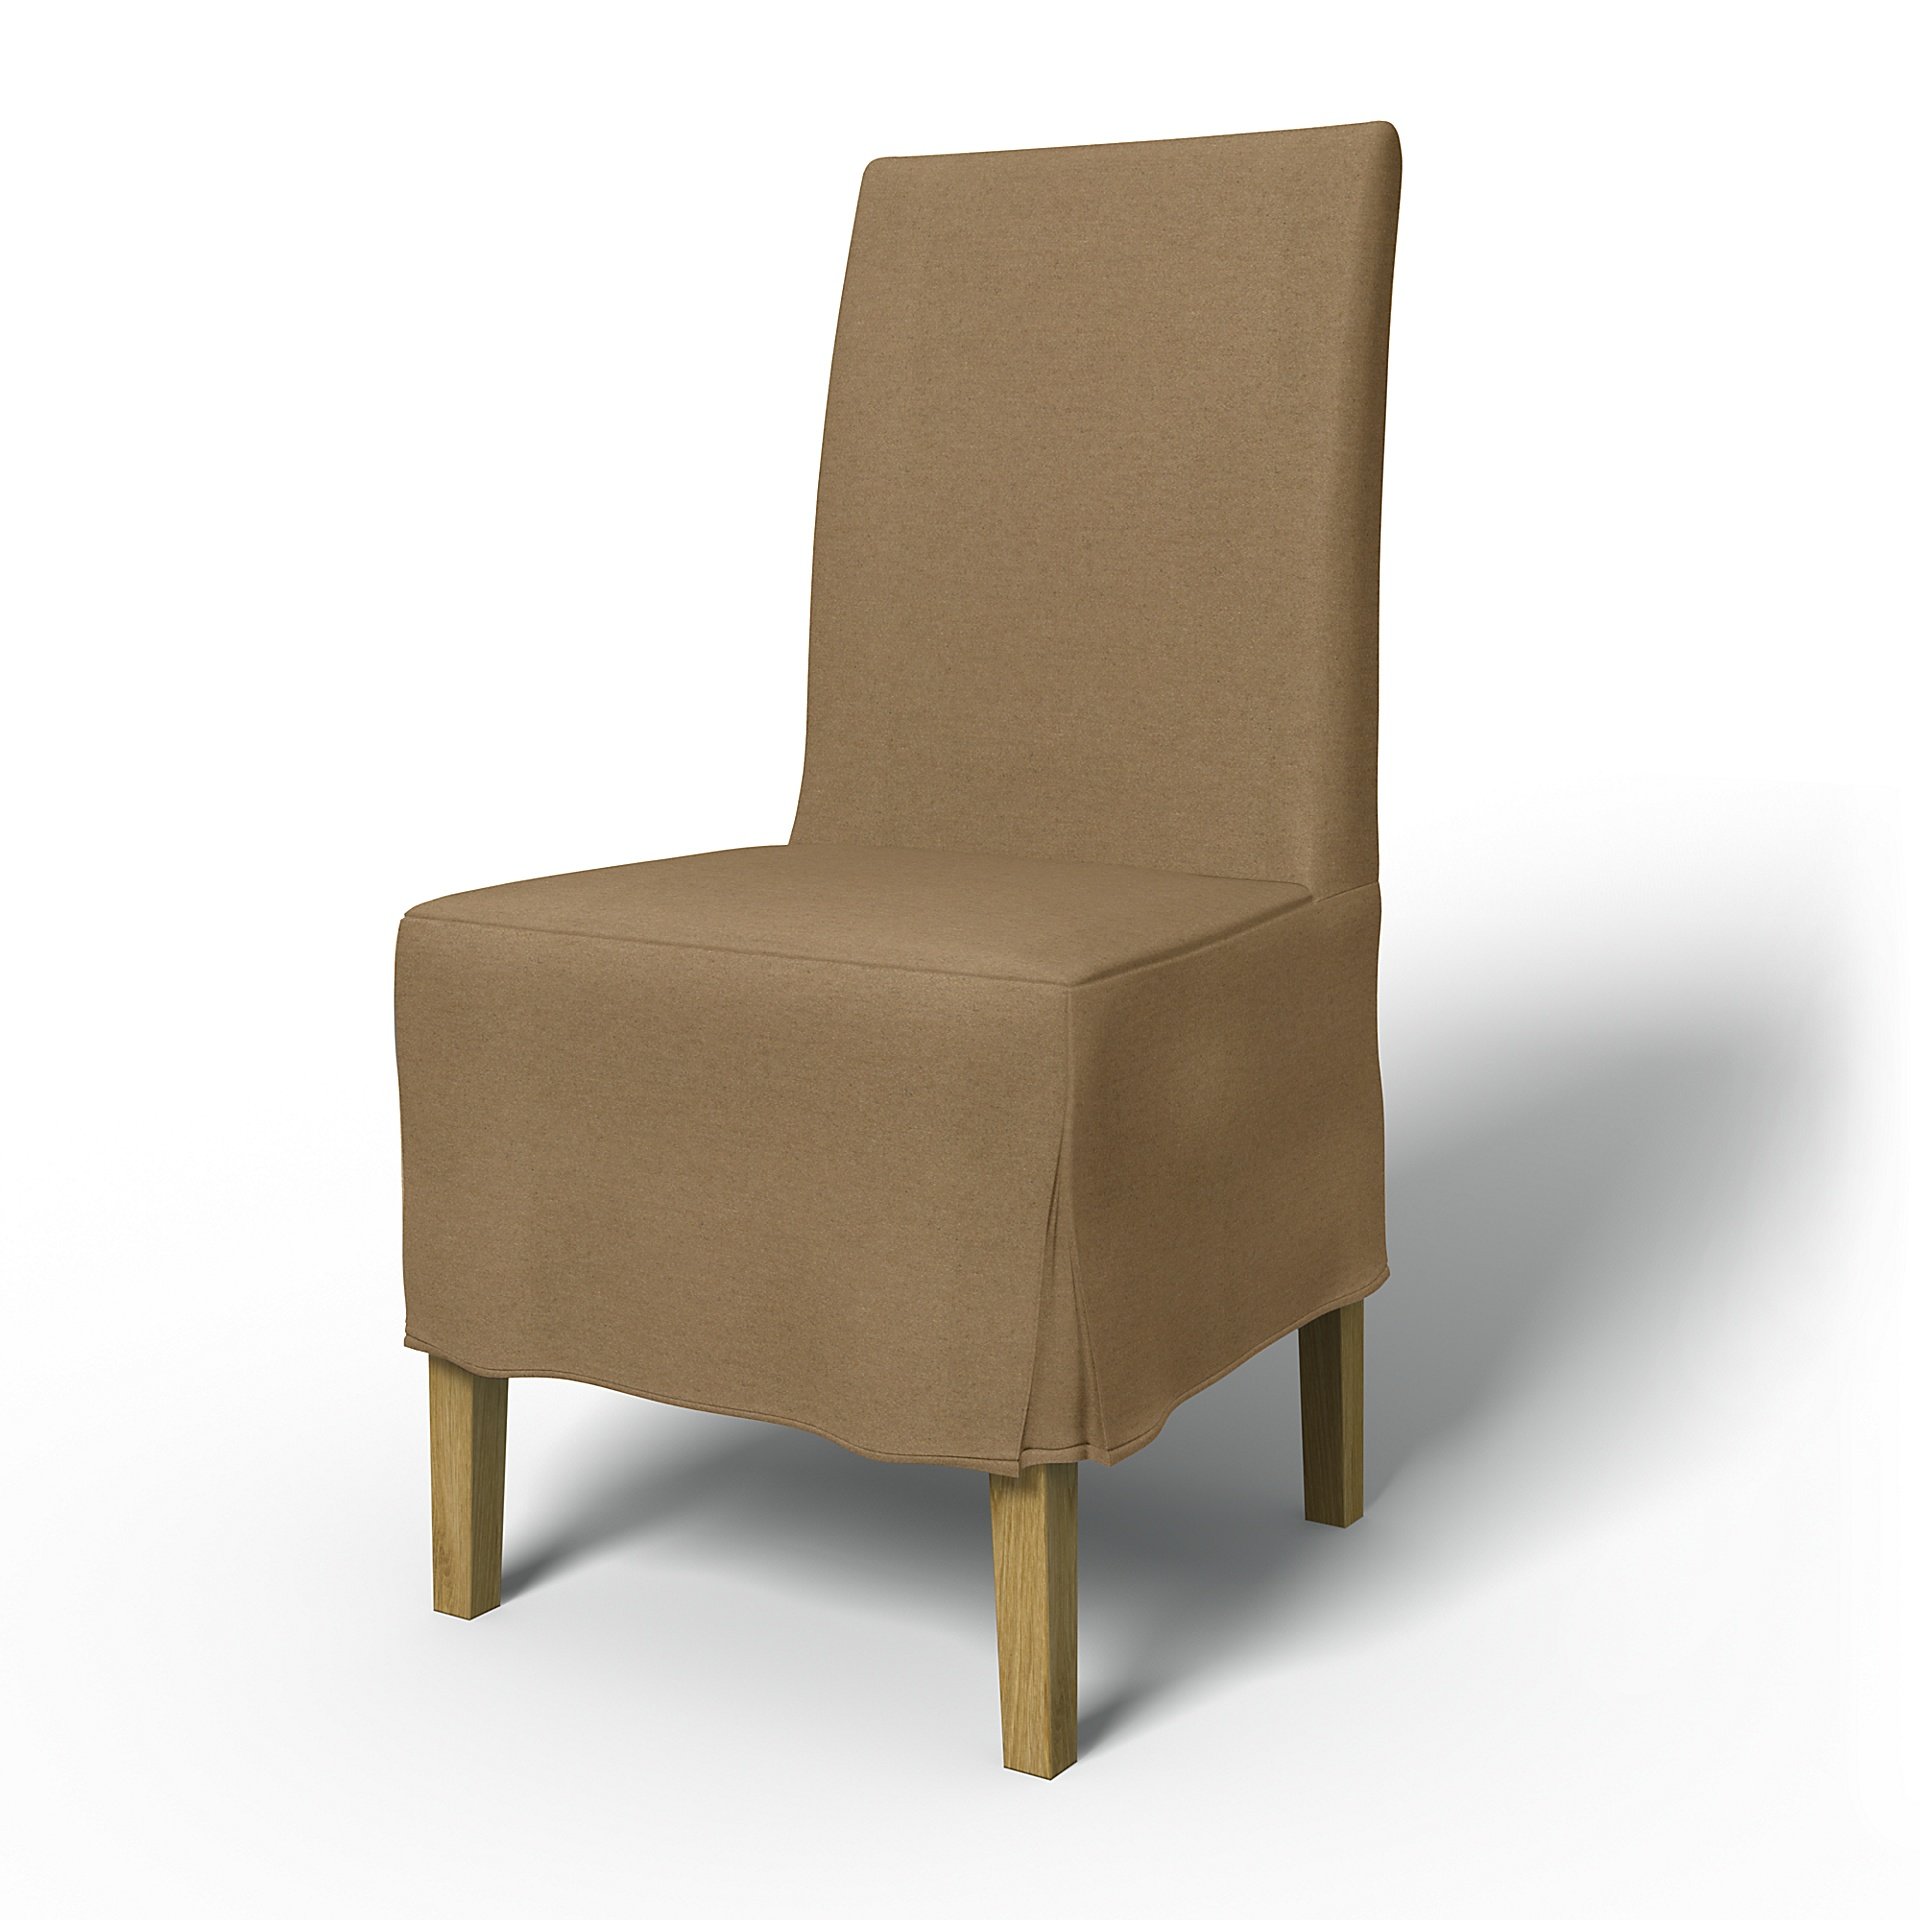 IKEA - Henriksdal Dining Chair Cover Medium skirt with Box Pleat (Standard model), Sand, Wool - Bemz